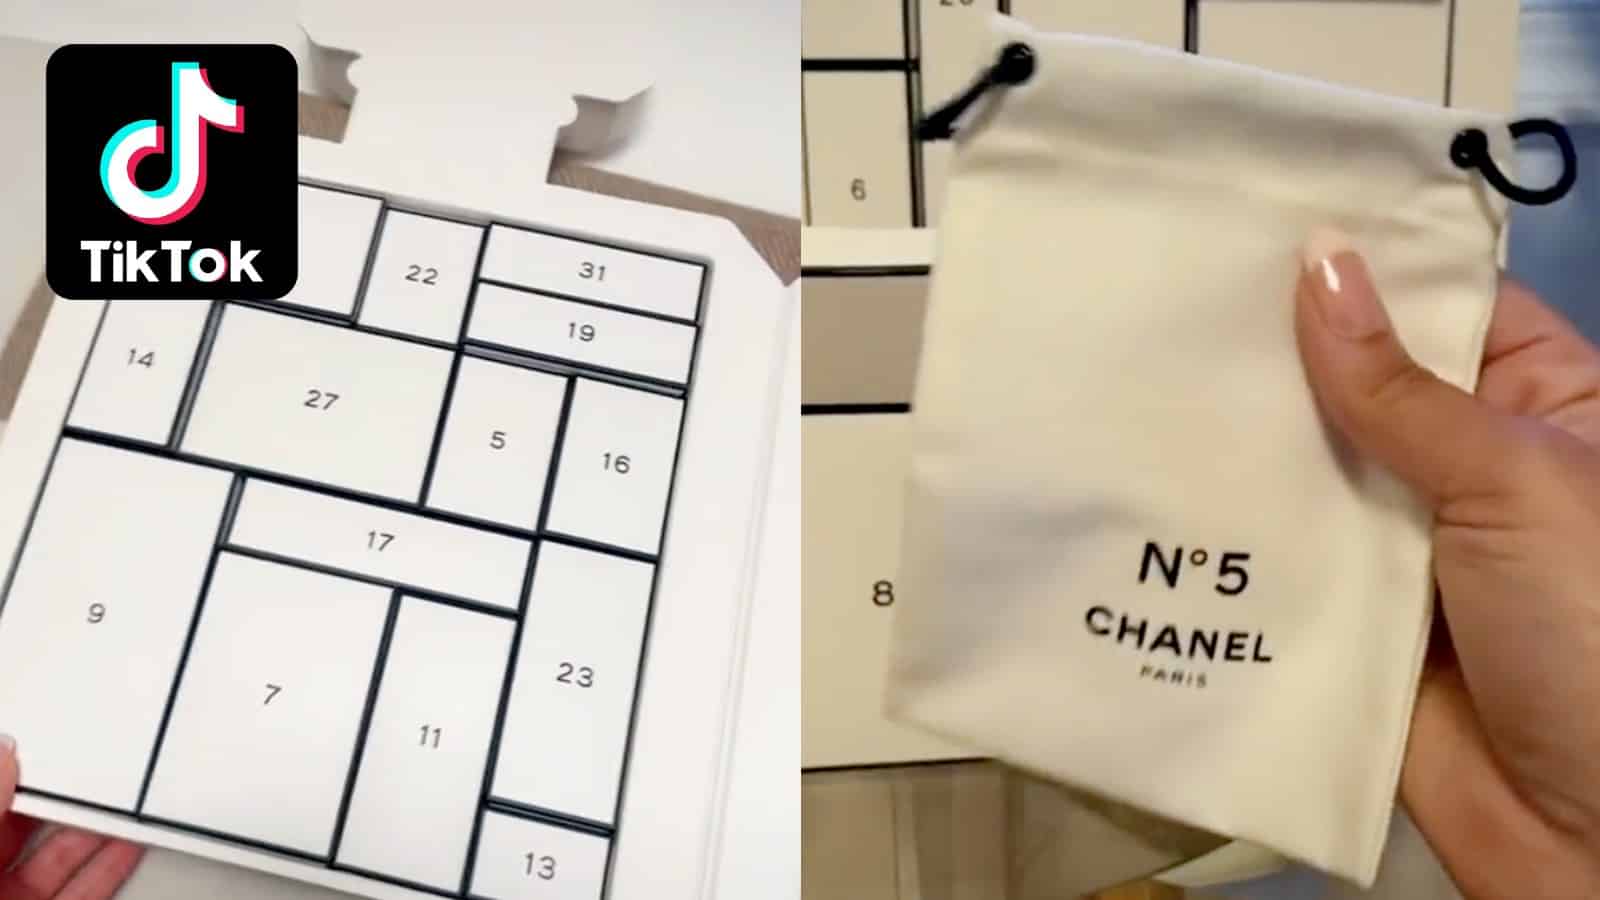 Chanel advent calendar next to the TikTok logo